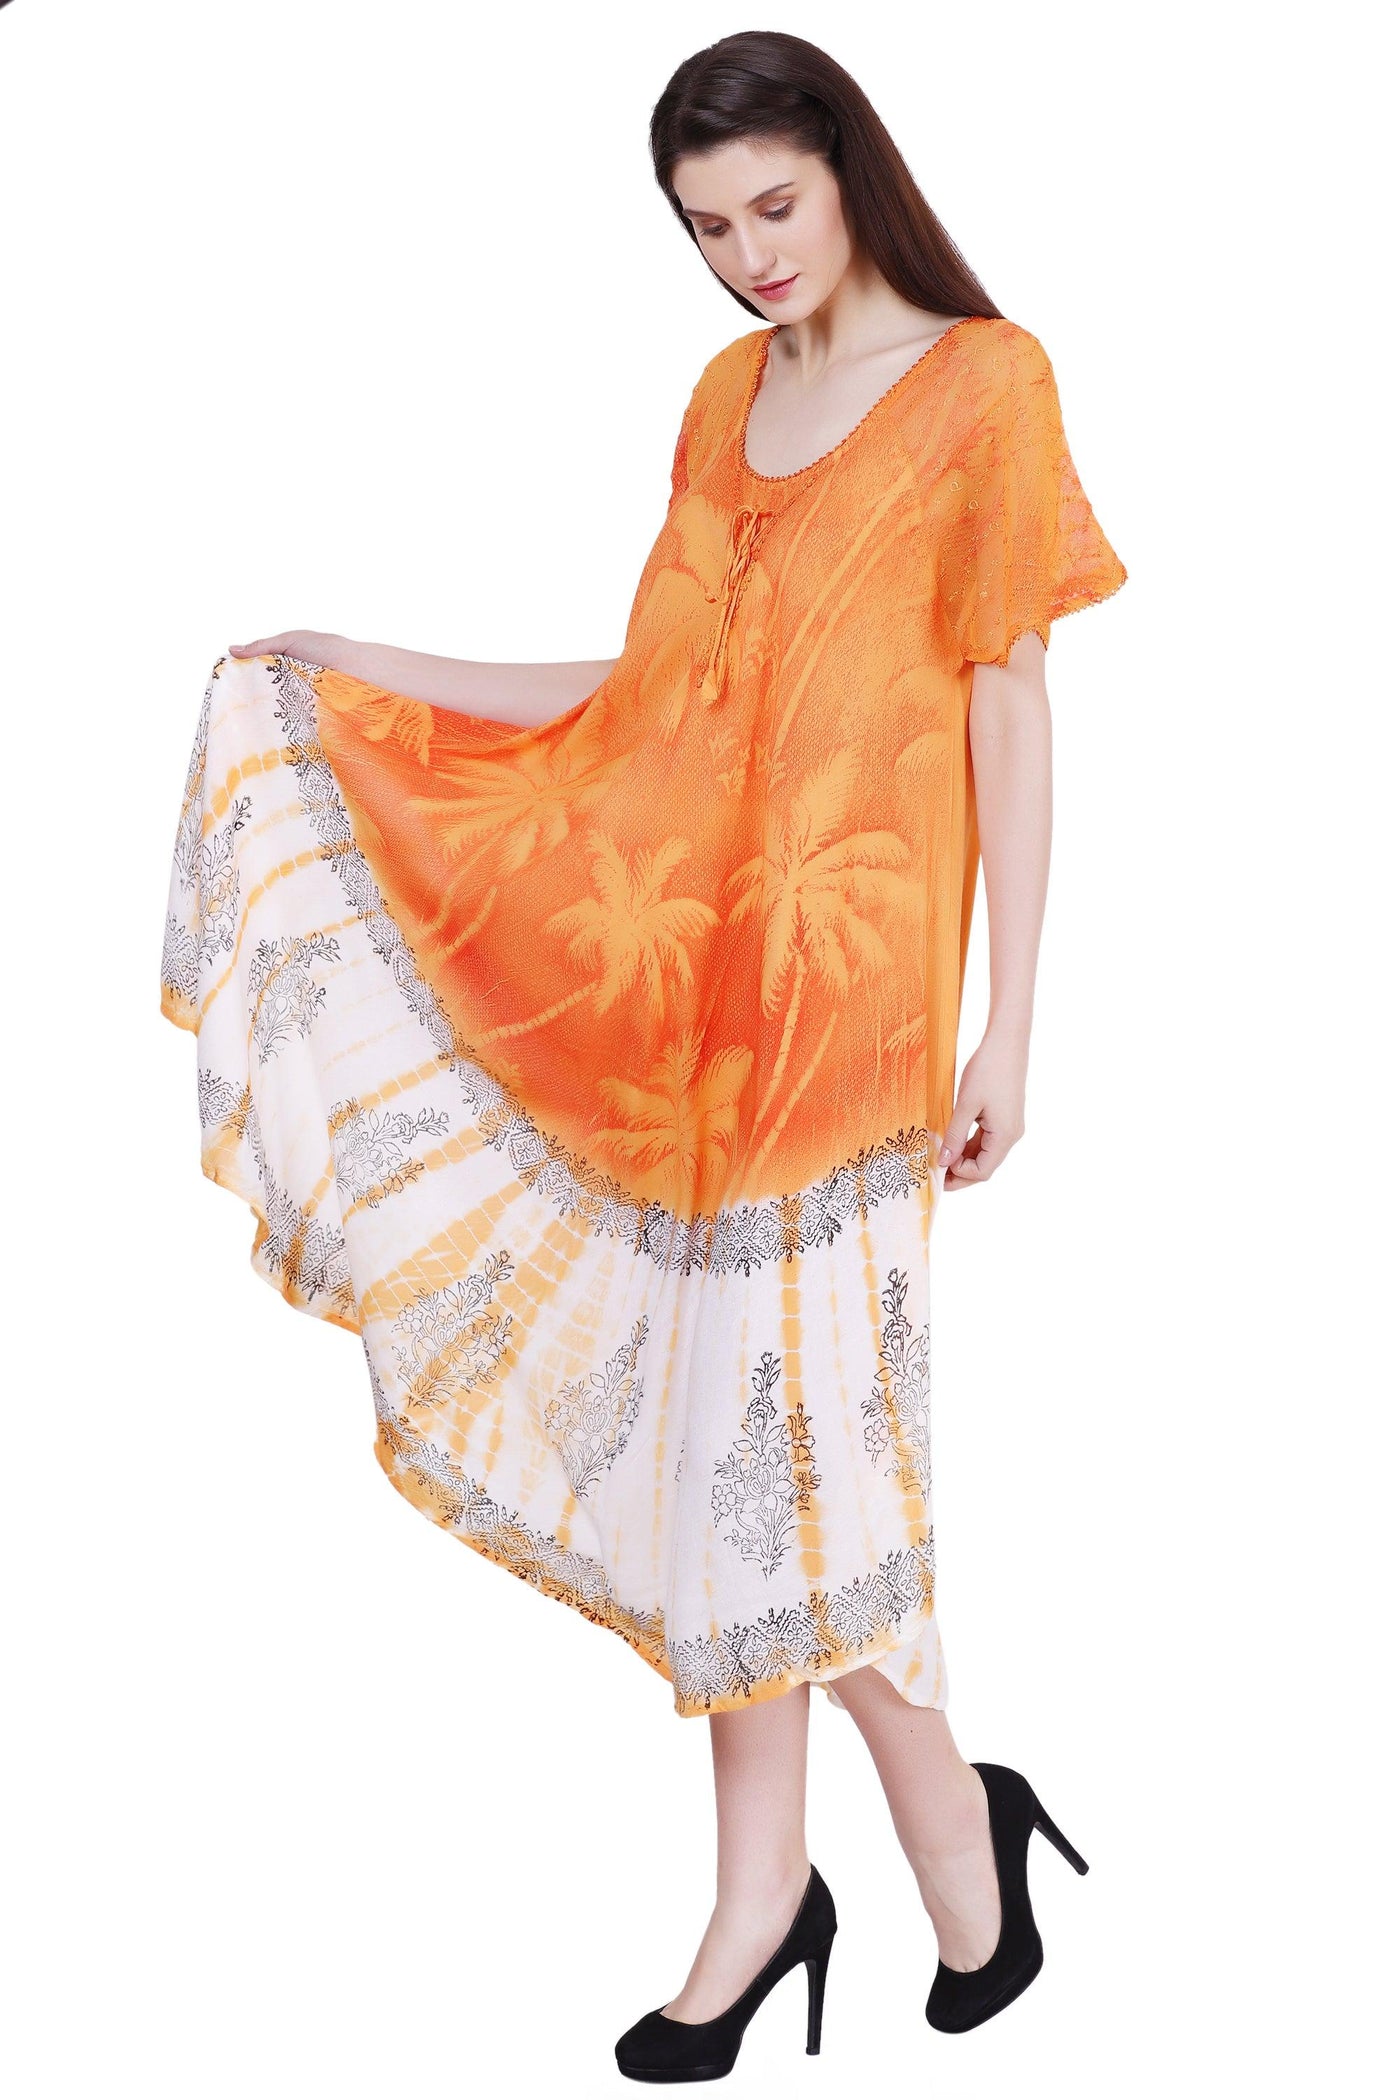 Palm Tree Block Print Tie Dye Dress 18603  - Advance Apparels Inc